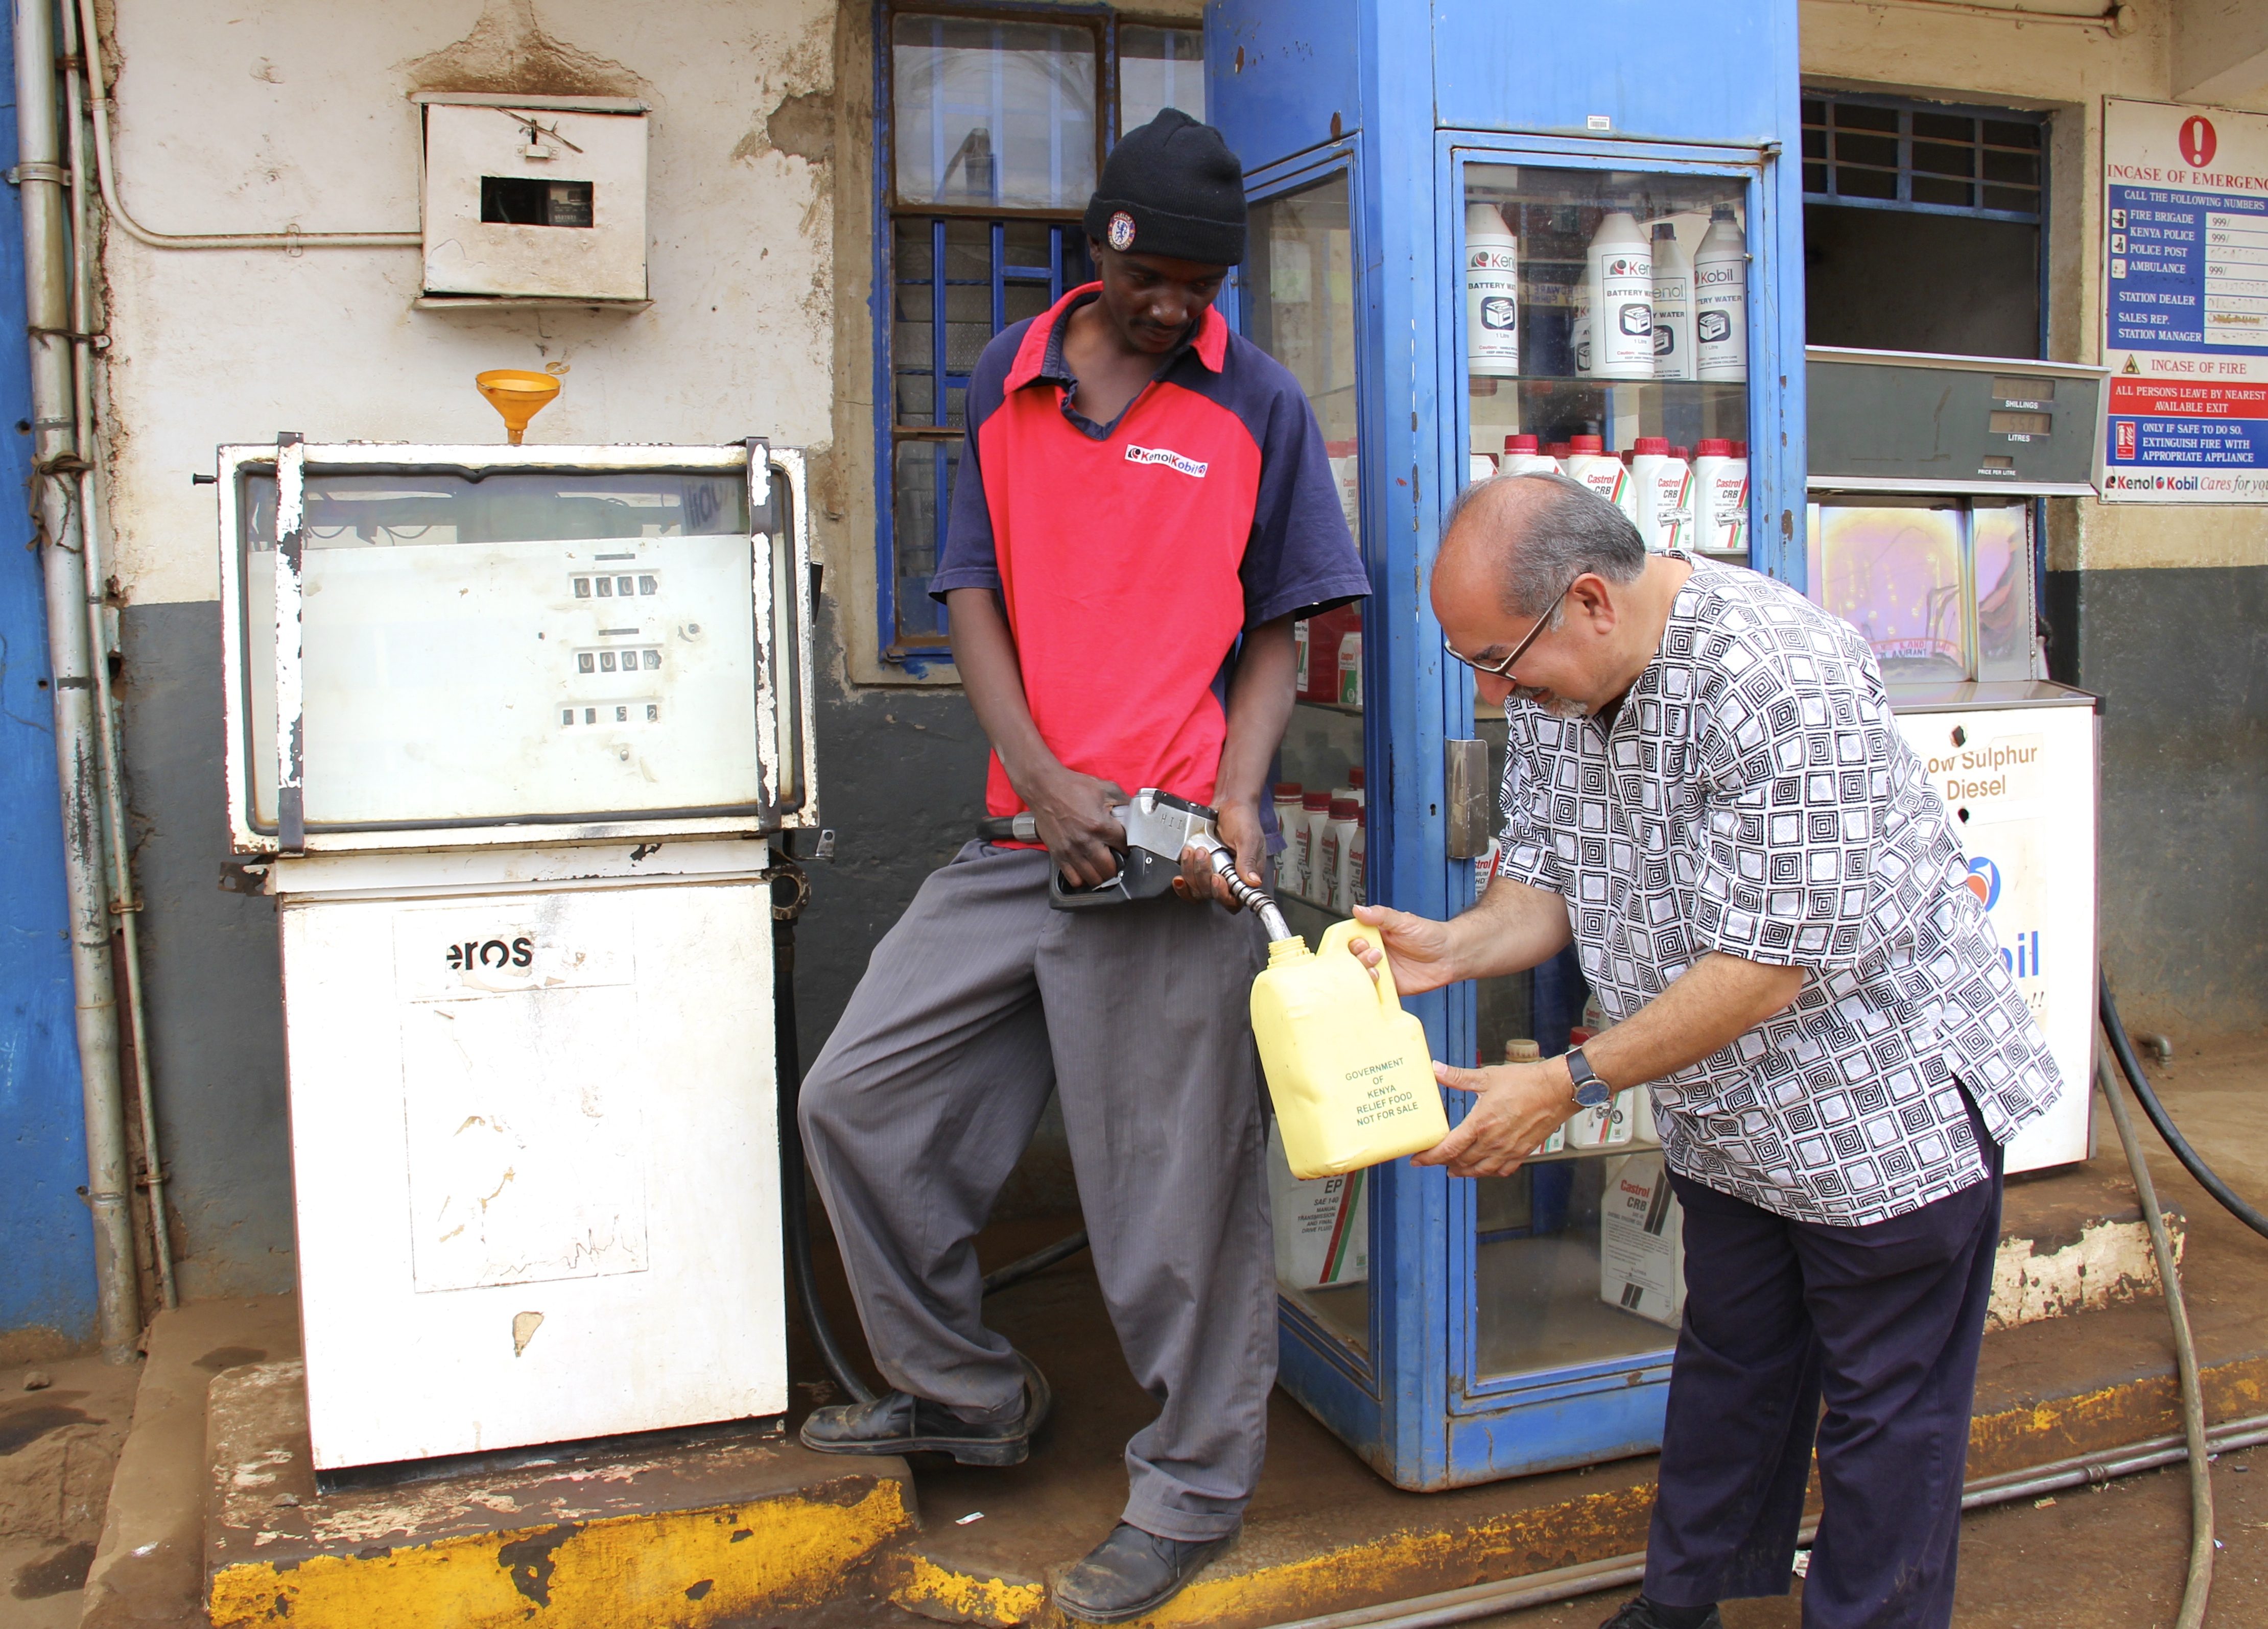 Buying kerosene in Kenya for the Solar Campaign